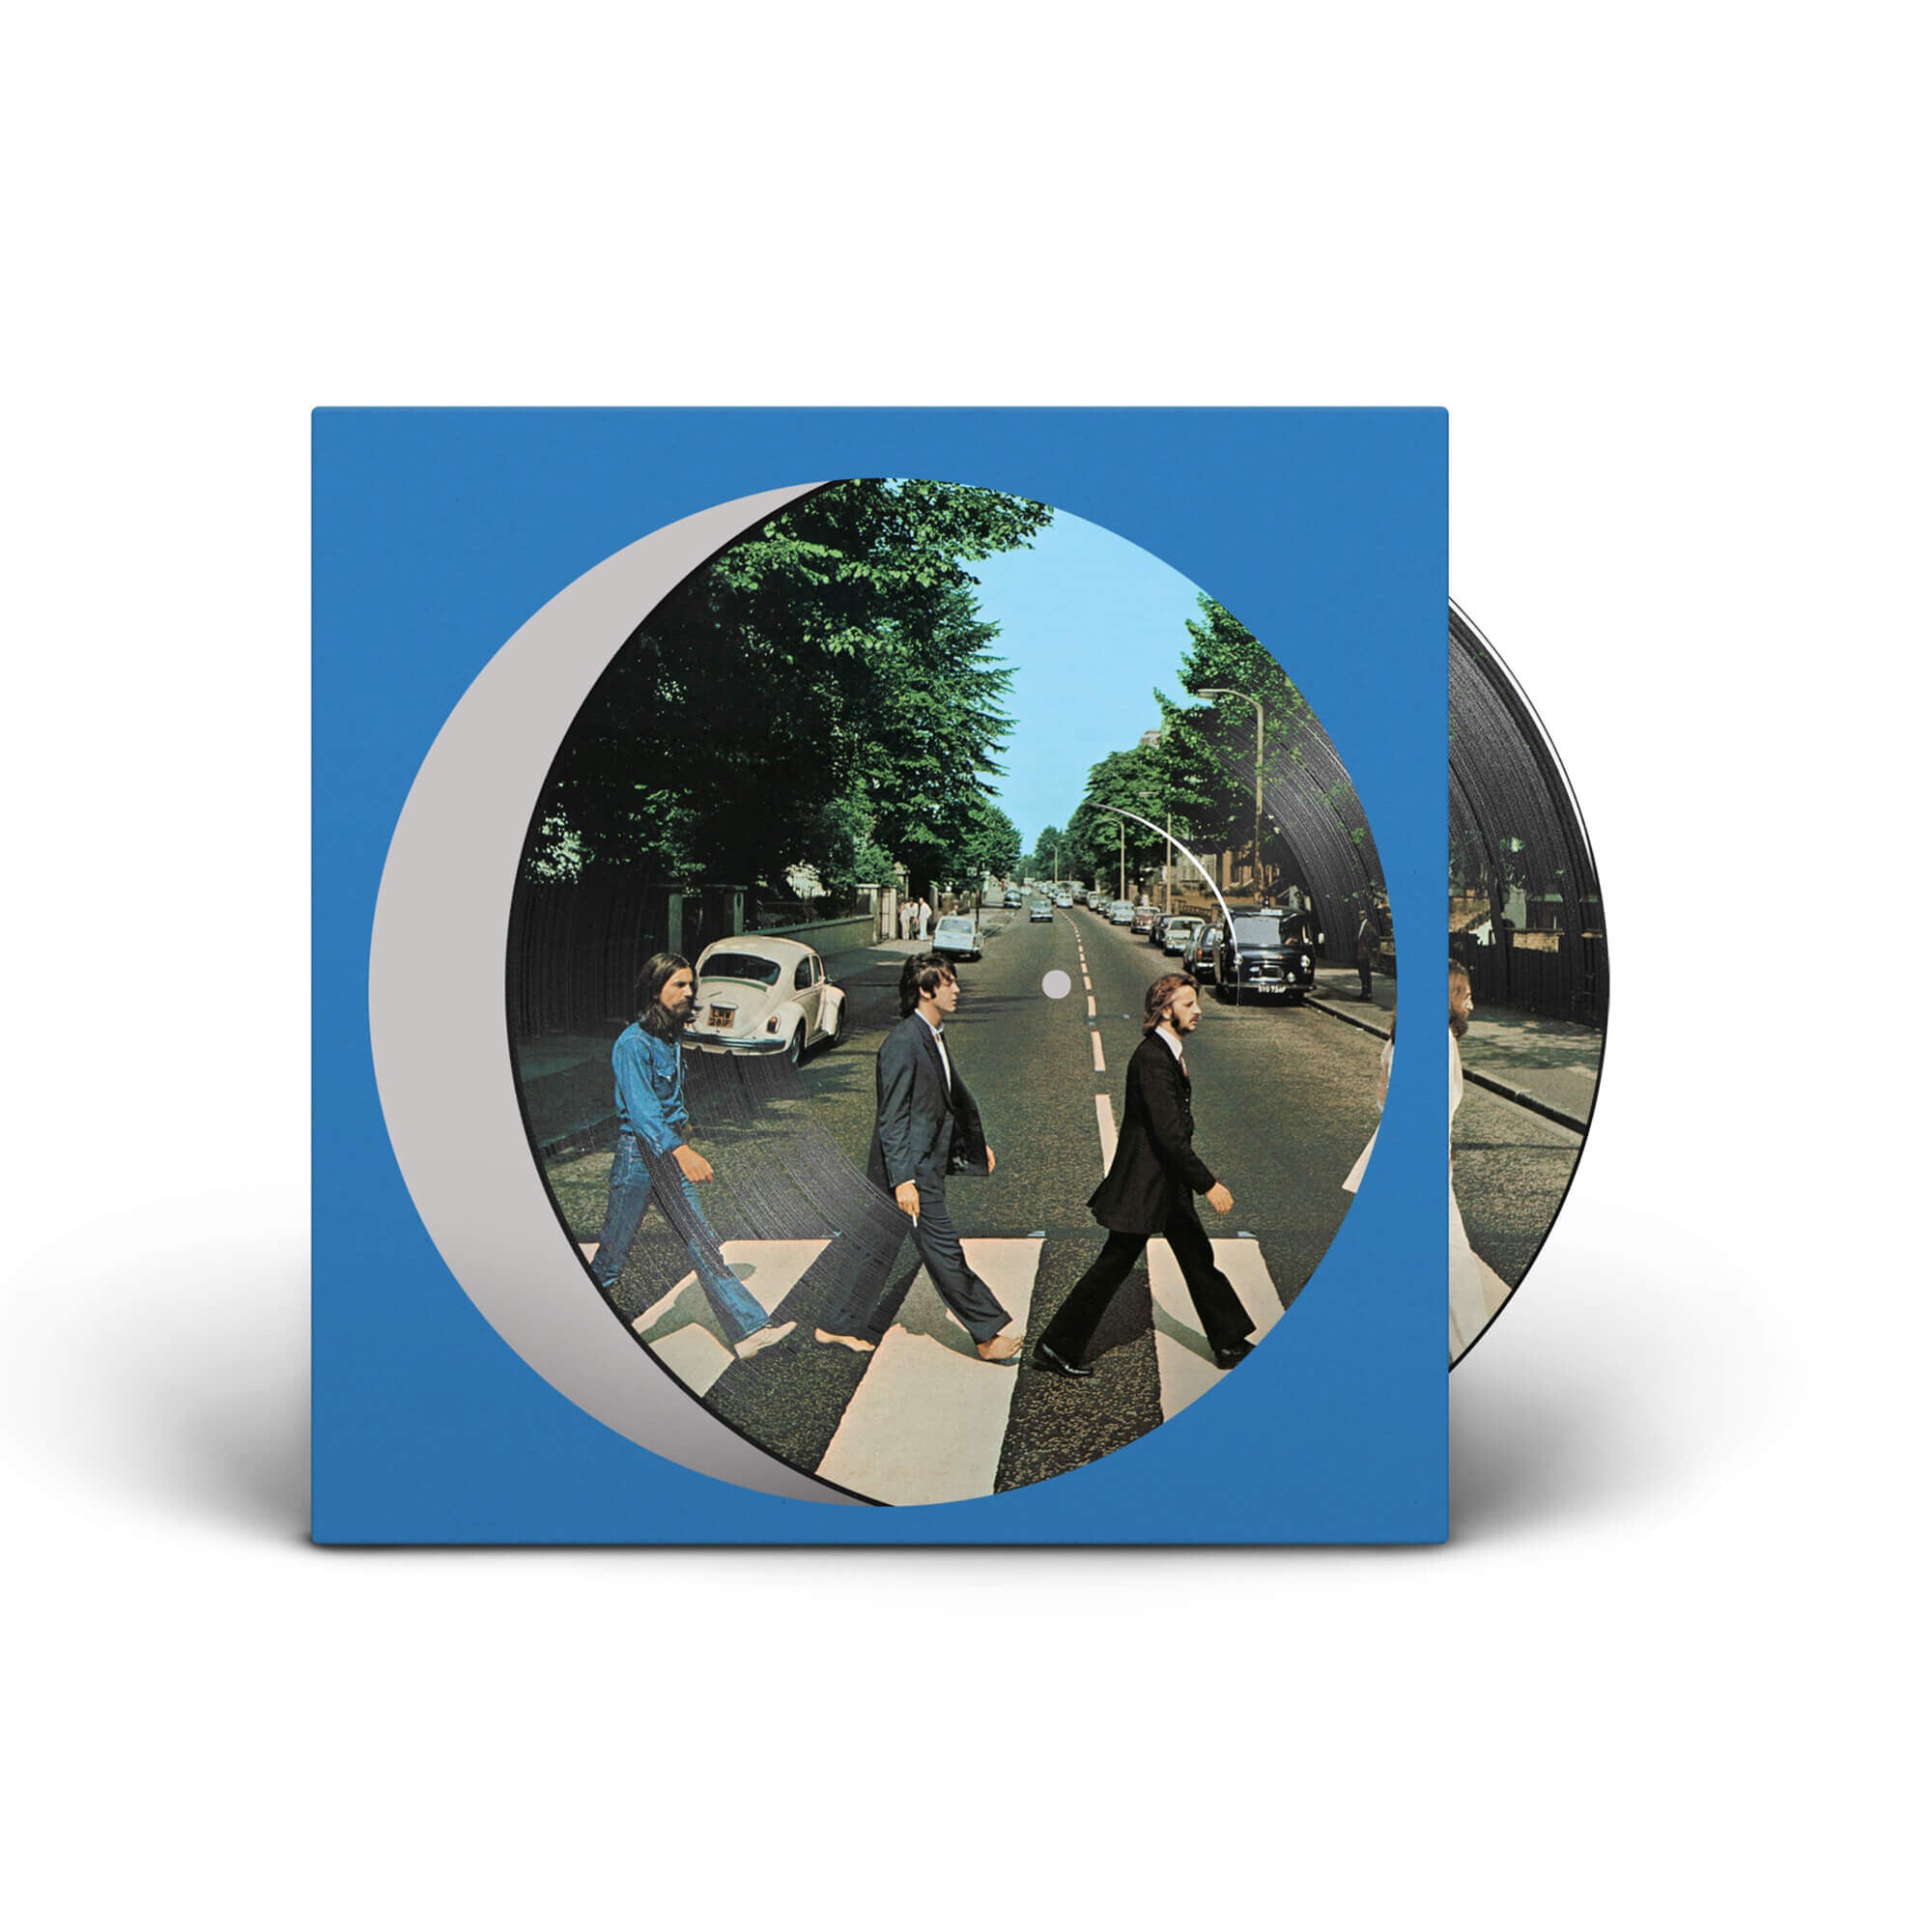 https://images.bravado.de/prod/product-assets/product-asset-data/beatles-the/the-beatles-international-1/products/130635/web/291963/image-thumb__291963__3000x3000_original/The-Beatles-Abbey-Road-Anniversary-Edition-Ltd-1LP-Picture-Disc-Vinyl-130635-291963.jpg